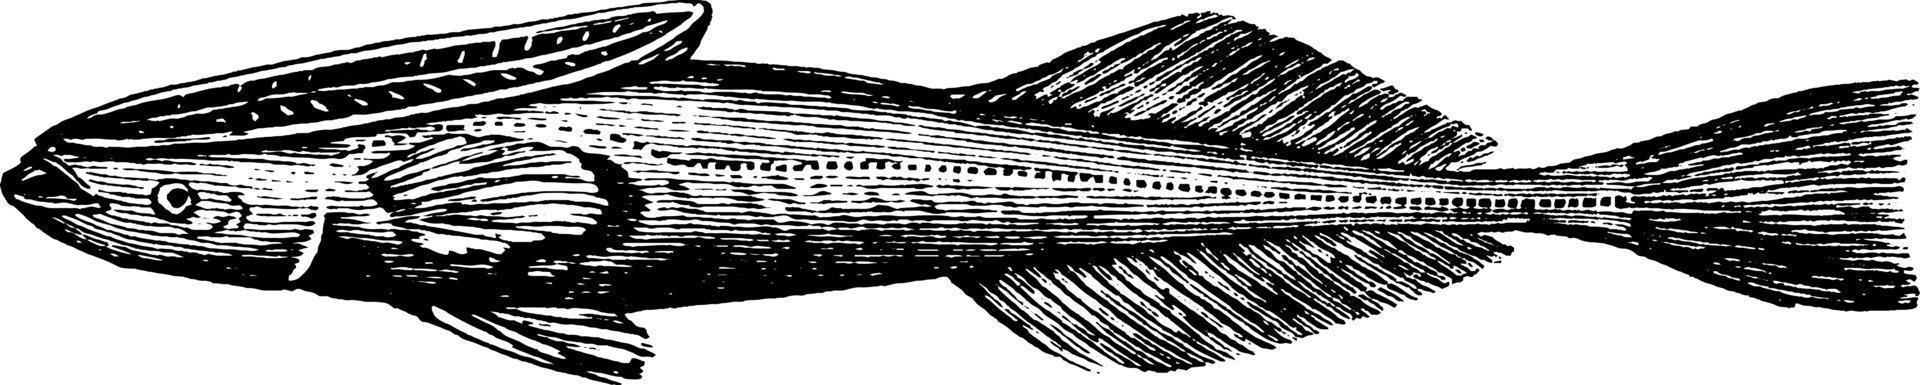 Suckerfish, Vintage Illustration. vektor